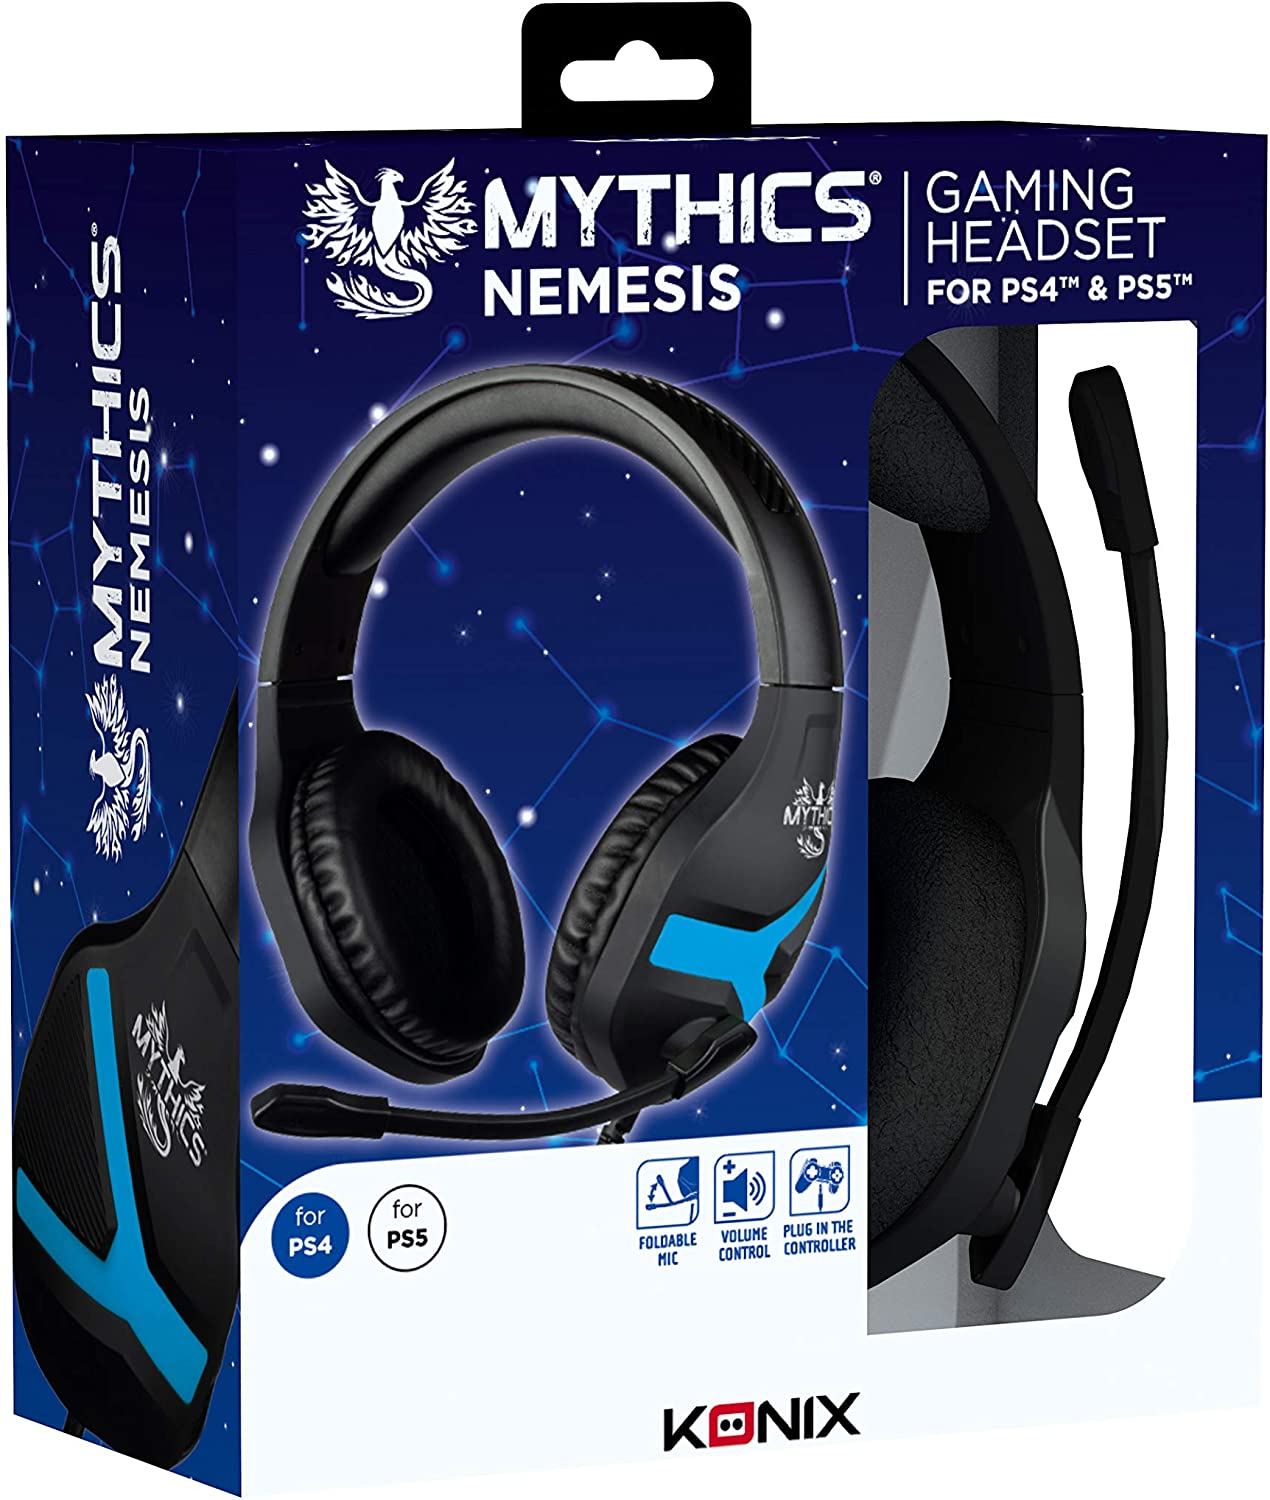 Konix Mythics Nemesis Gaming Headset for PS4 / PS5 for PlayStation 4,  PlayStation 5